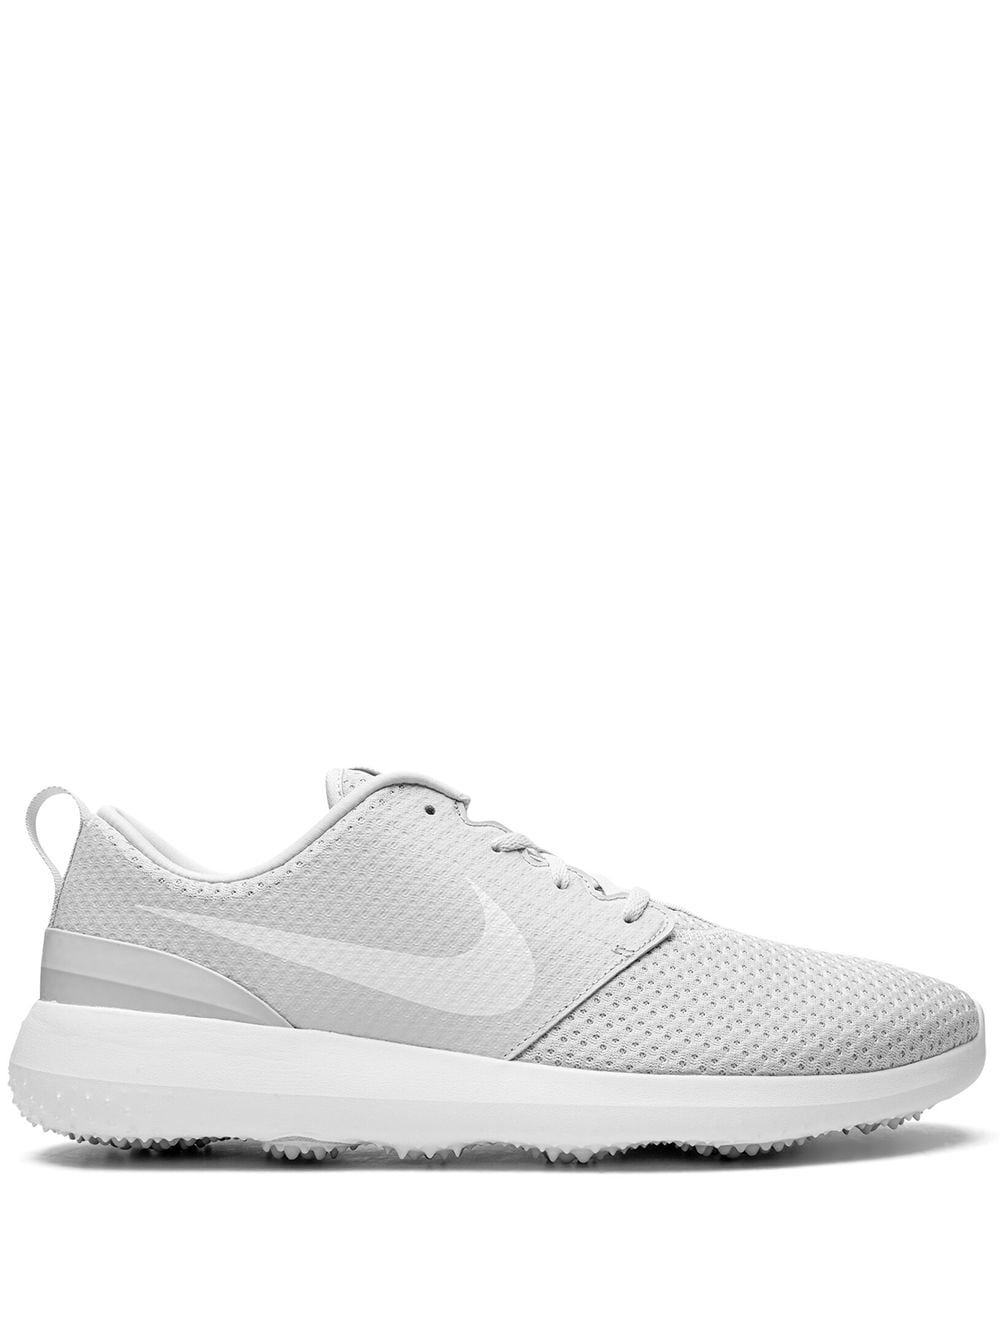 Nike Roshe G golf sneakers - Silver